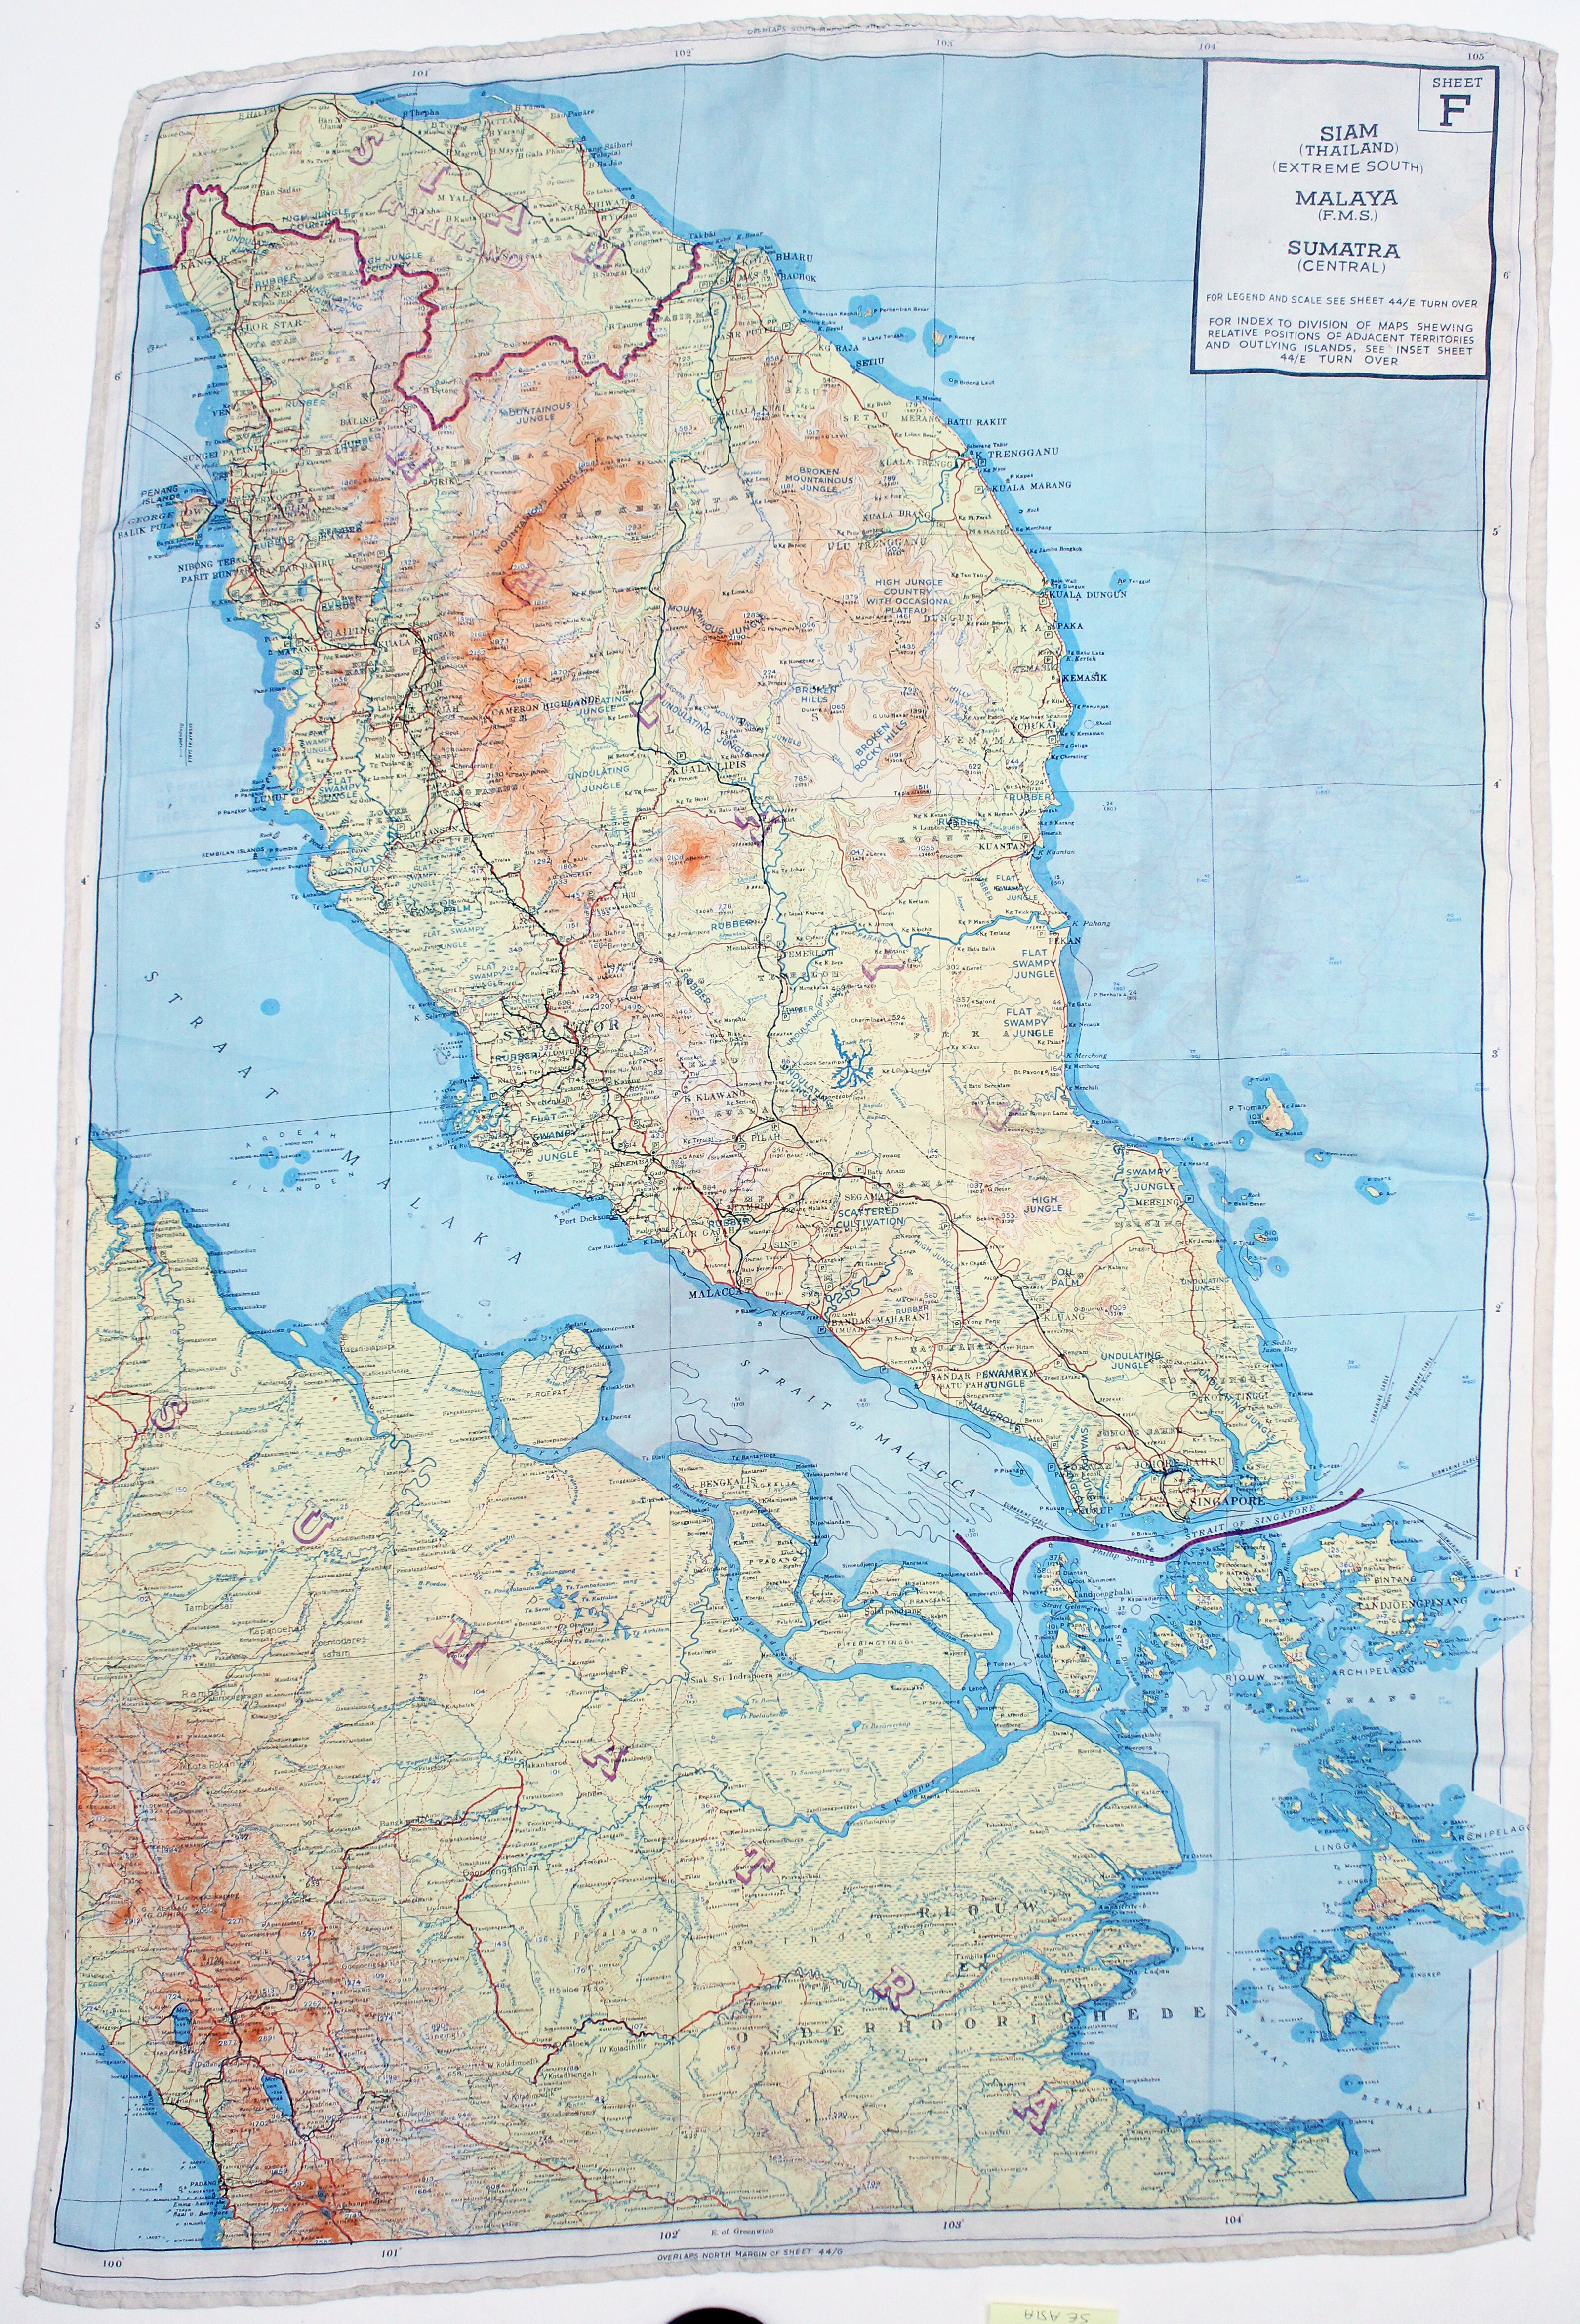 British Escape & Evasion Map of Southeast Asia